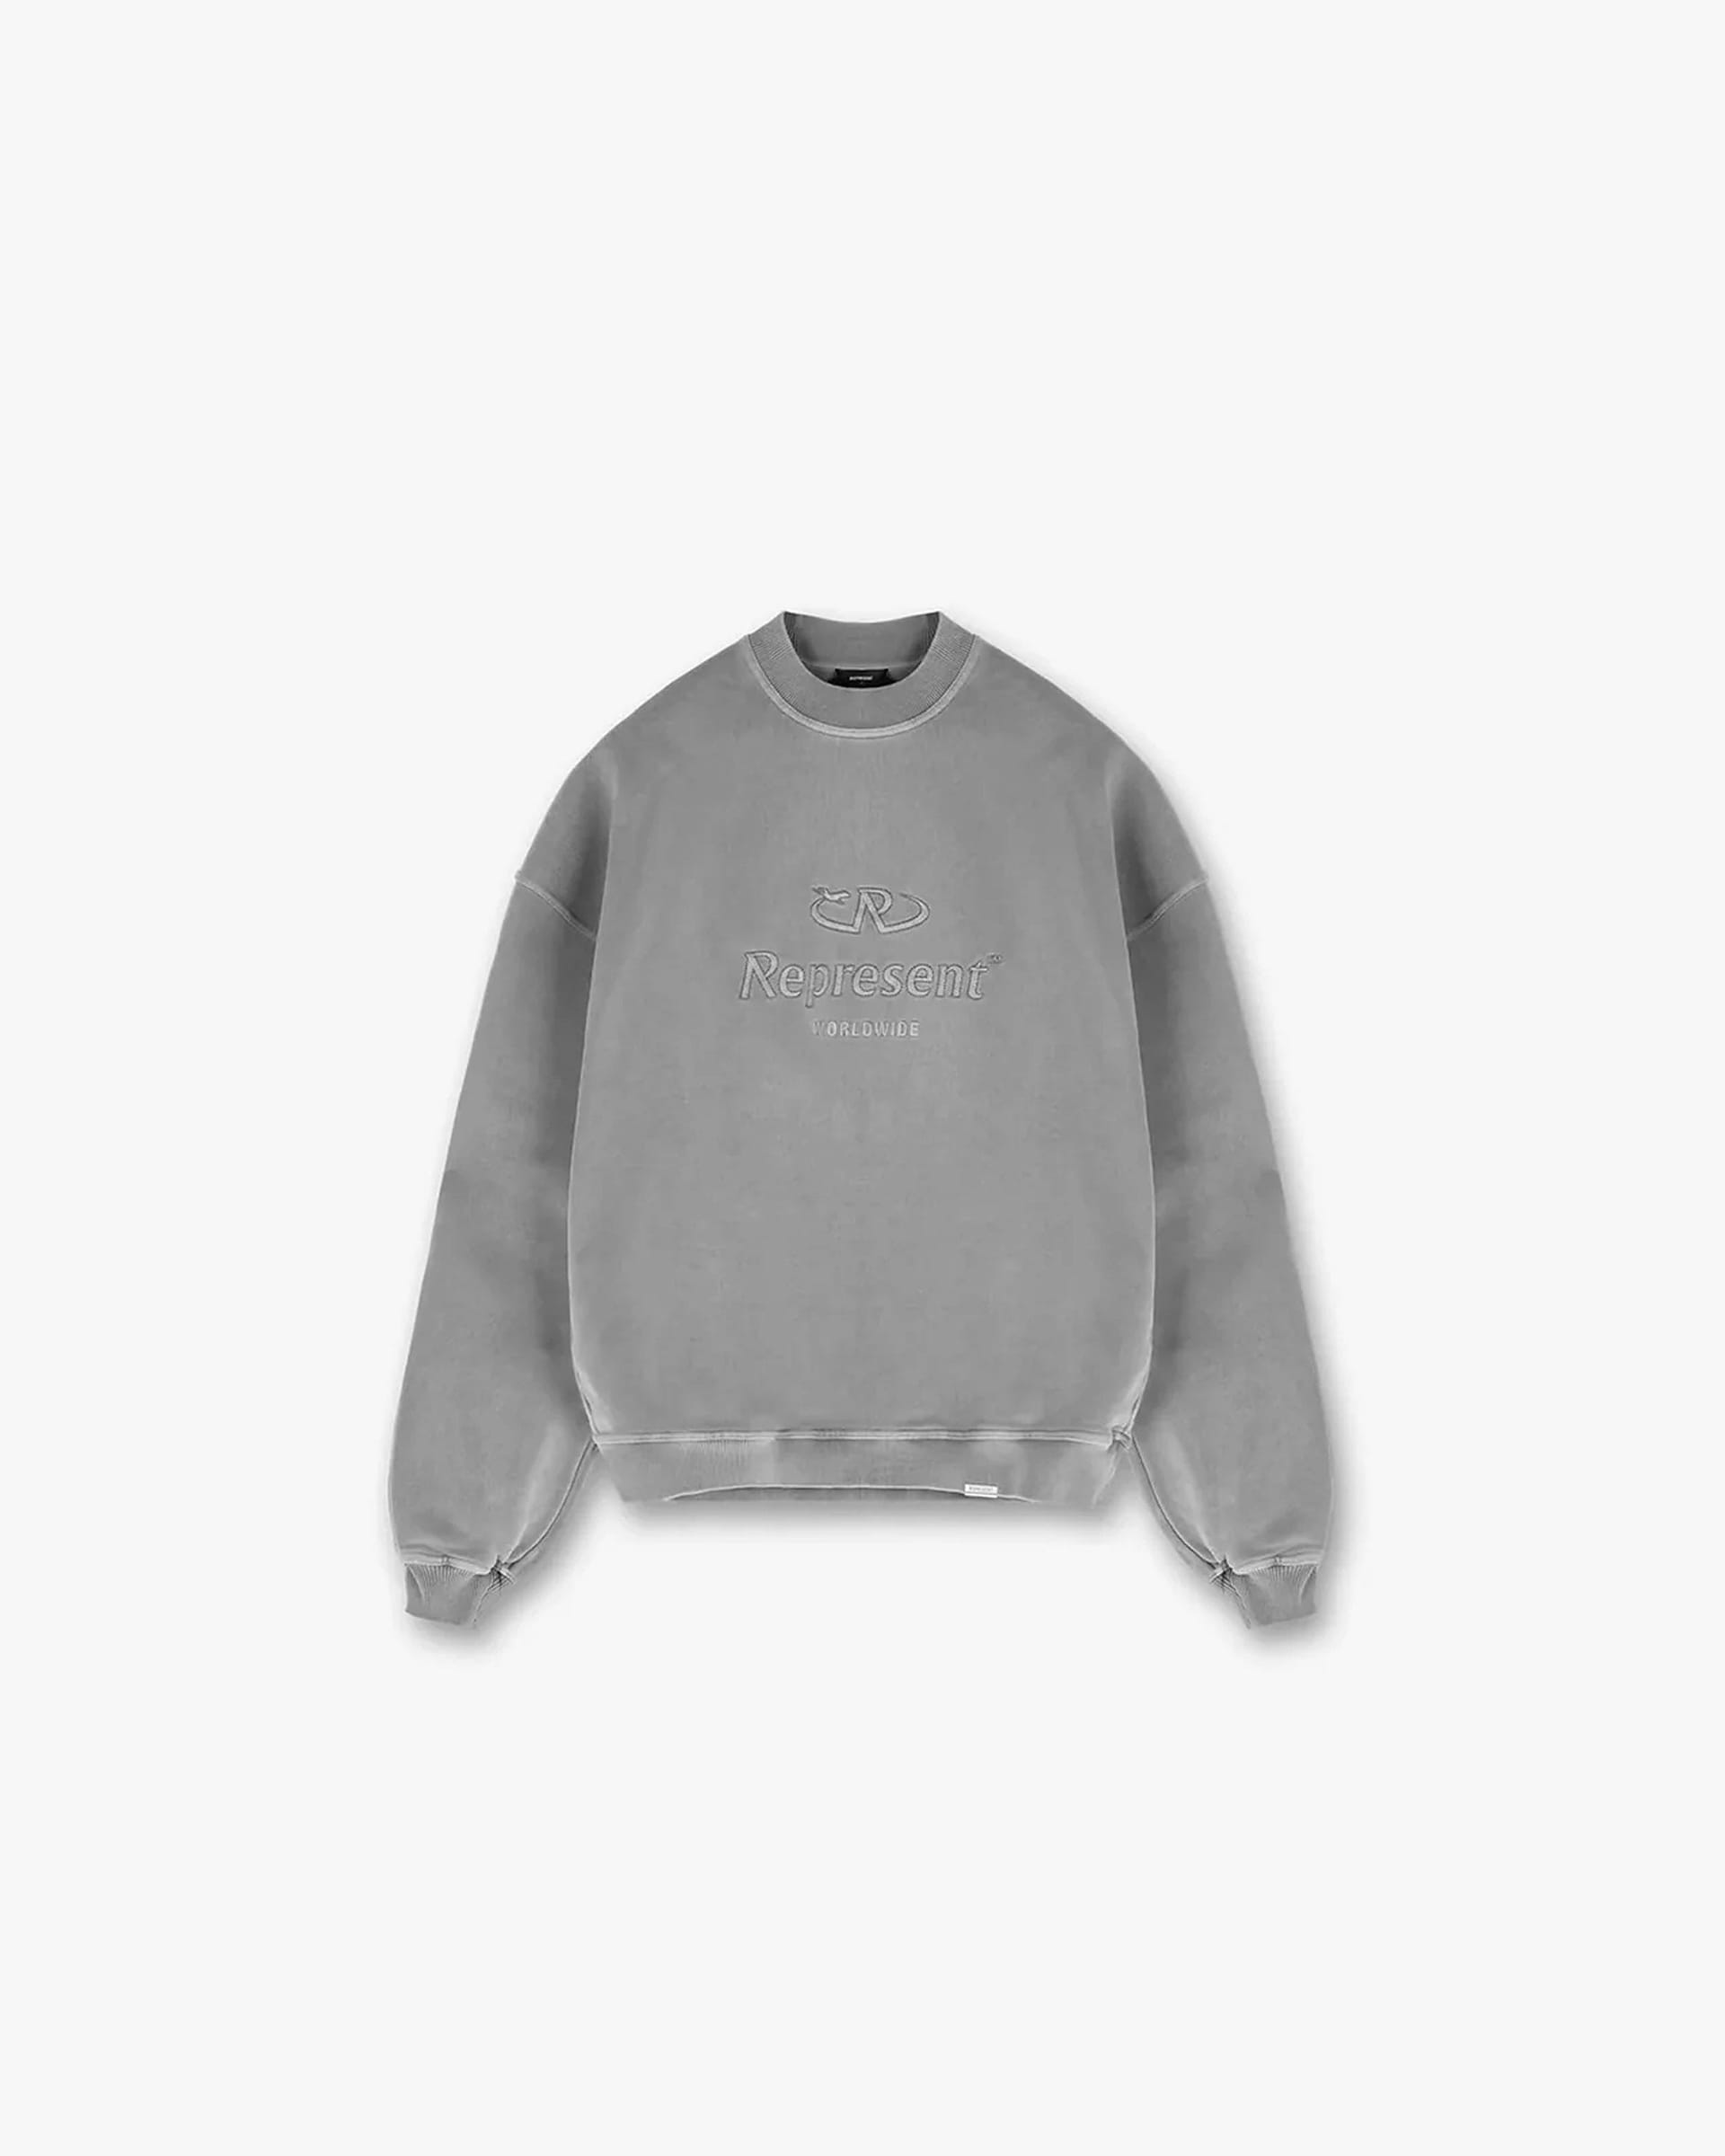 Worldwide Sweater | Ultimate Grey Sweaters SC23 | Represent Clo